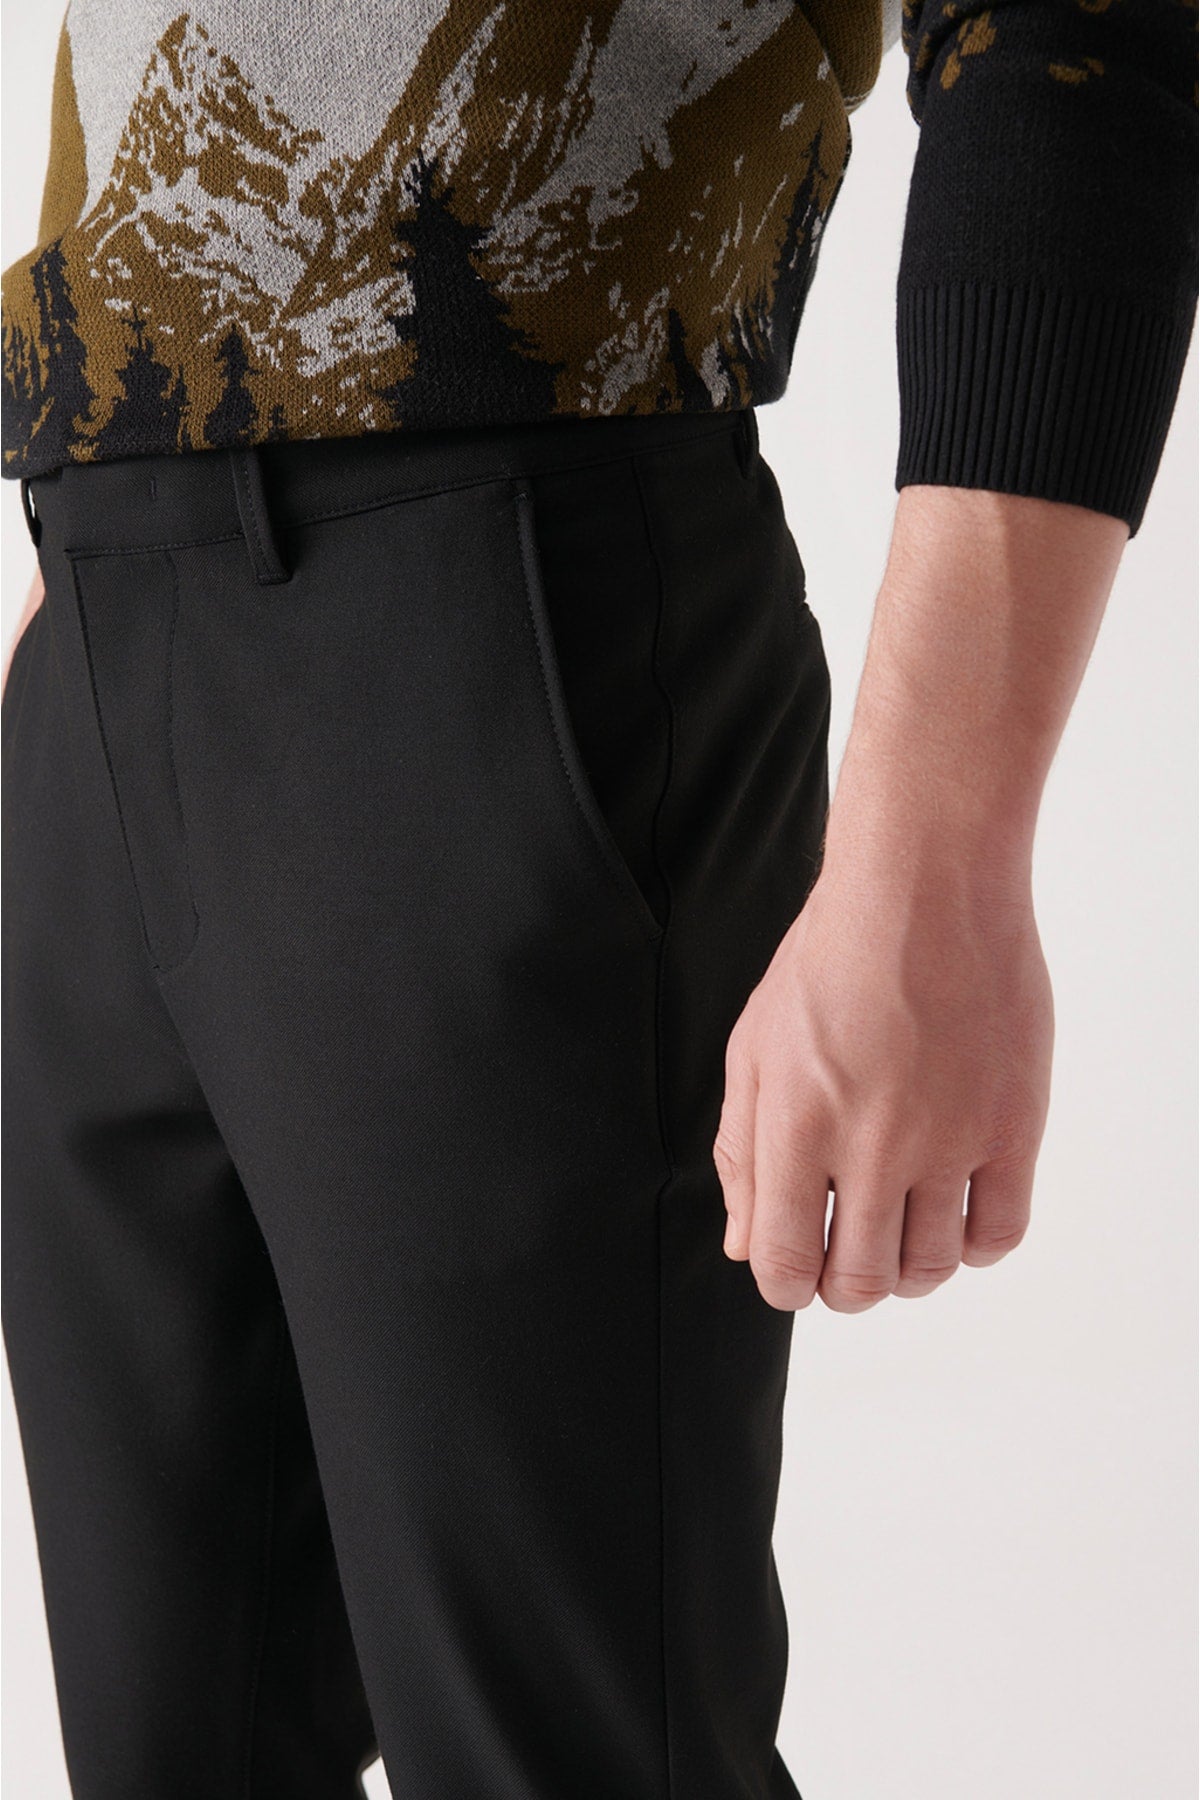 Men's black soft button W-Leisure Fit Chino Pants A22y3039